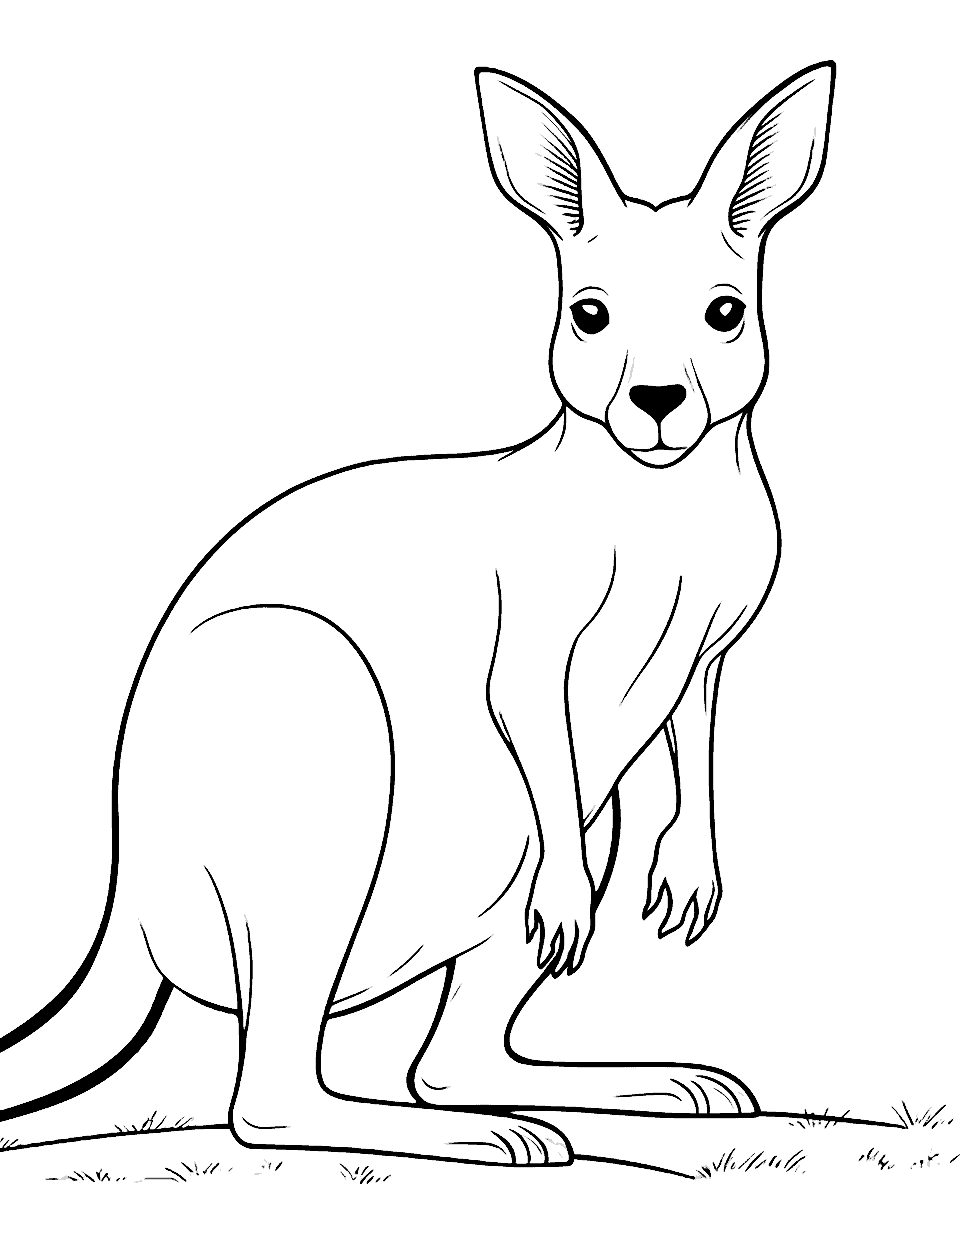 Playful Kangaroo Joey Animal Coloring Page - A kangaroo joey ready to explore.